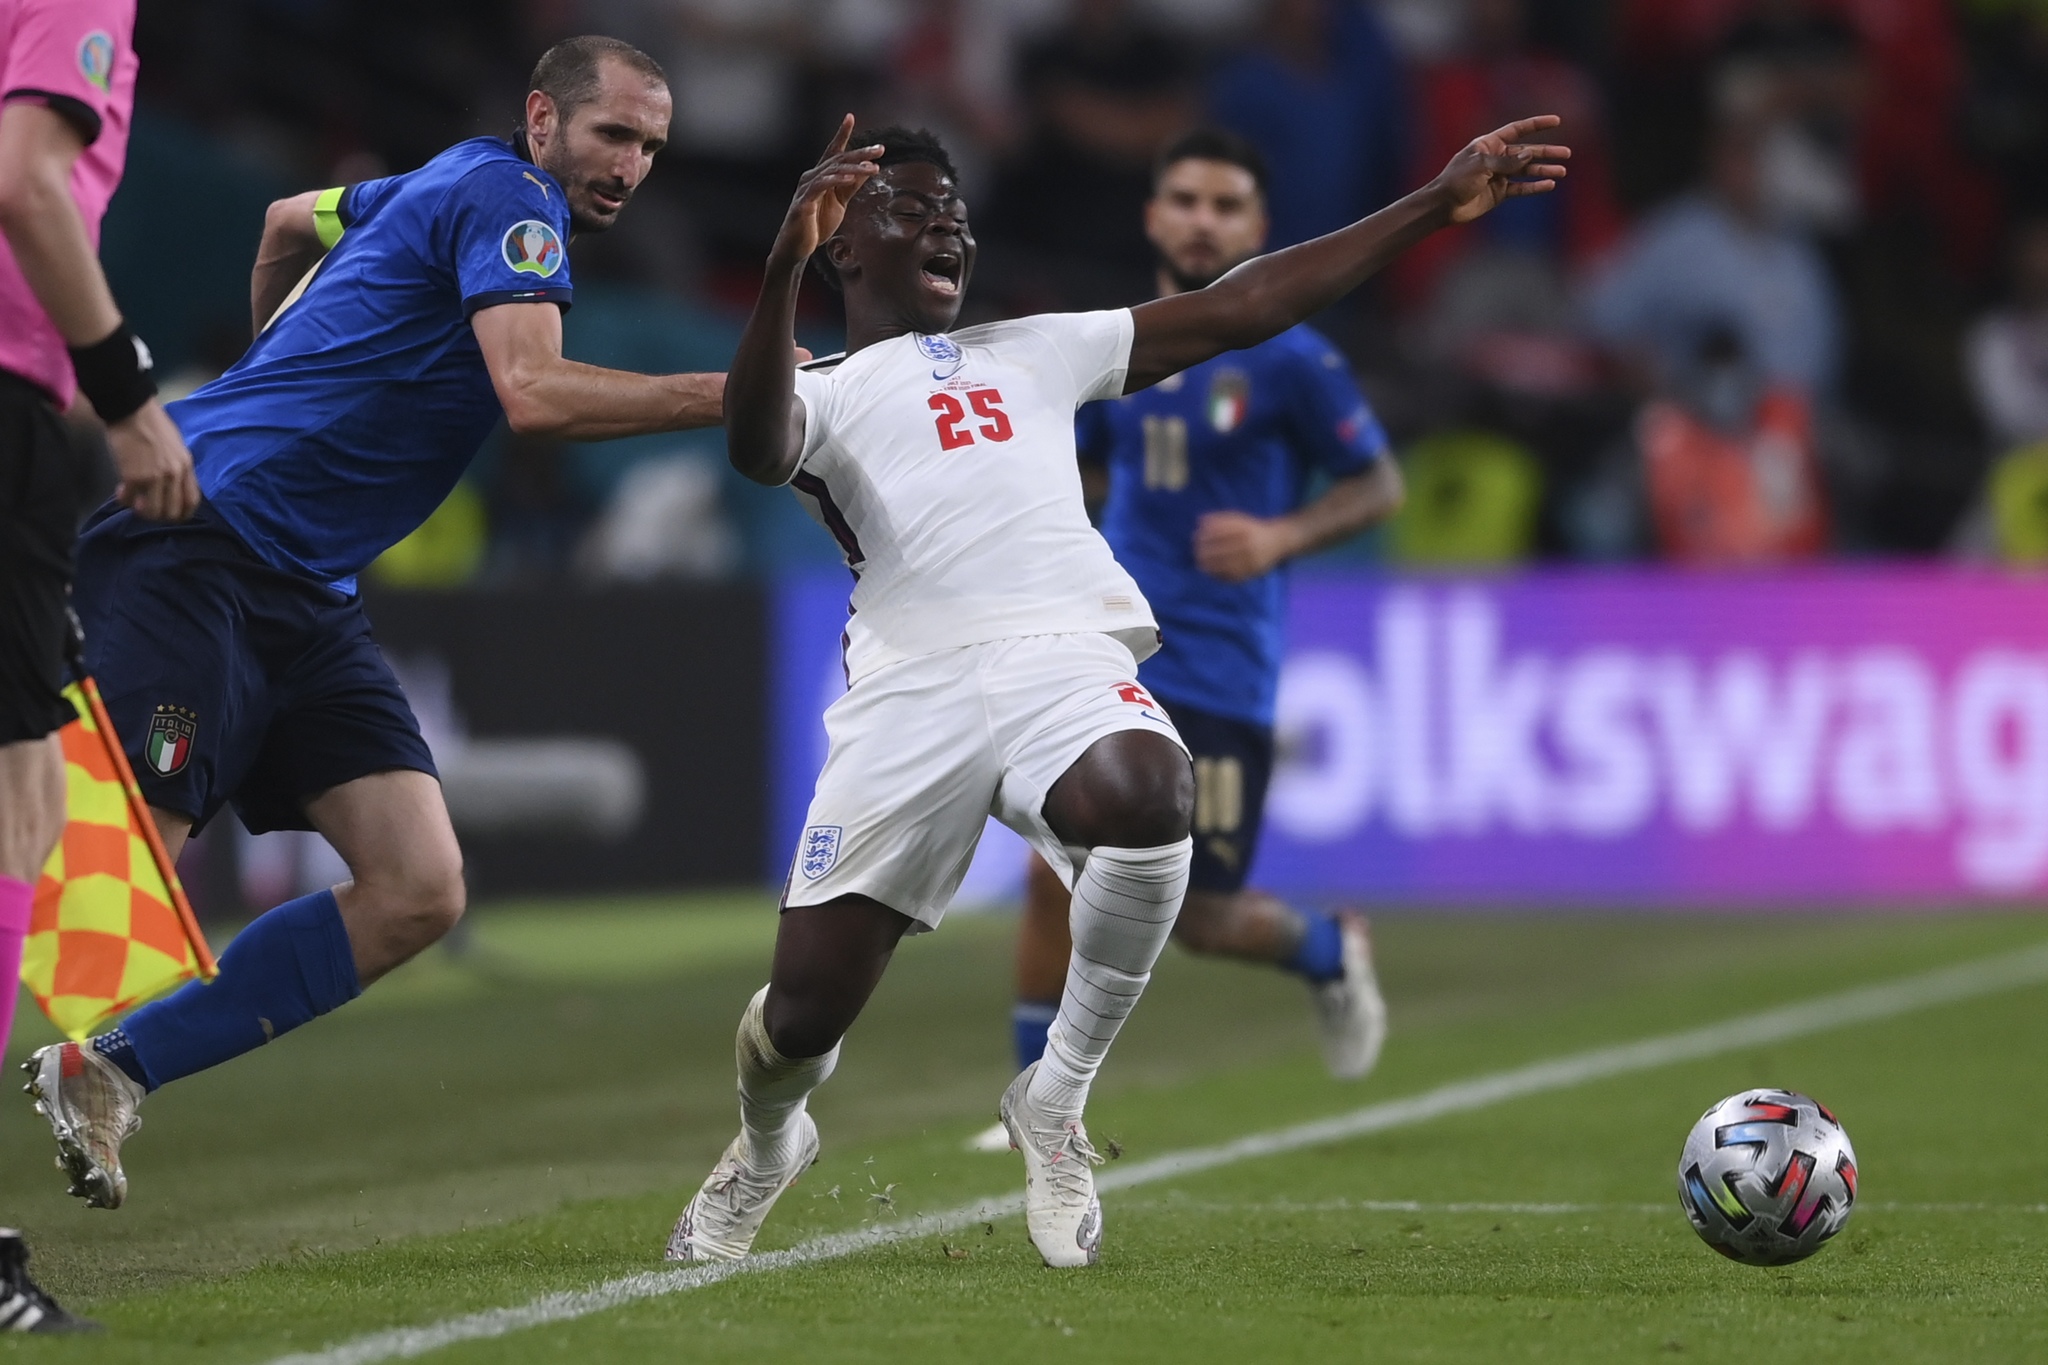 Italy's Giorgio Chiellini tugs the shirt of England's Bukayo Saka